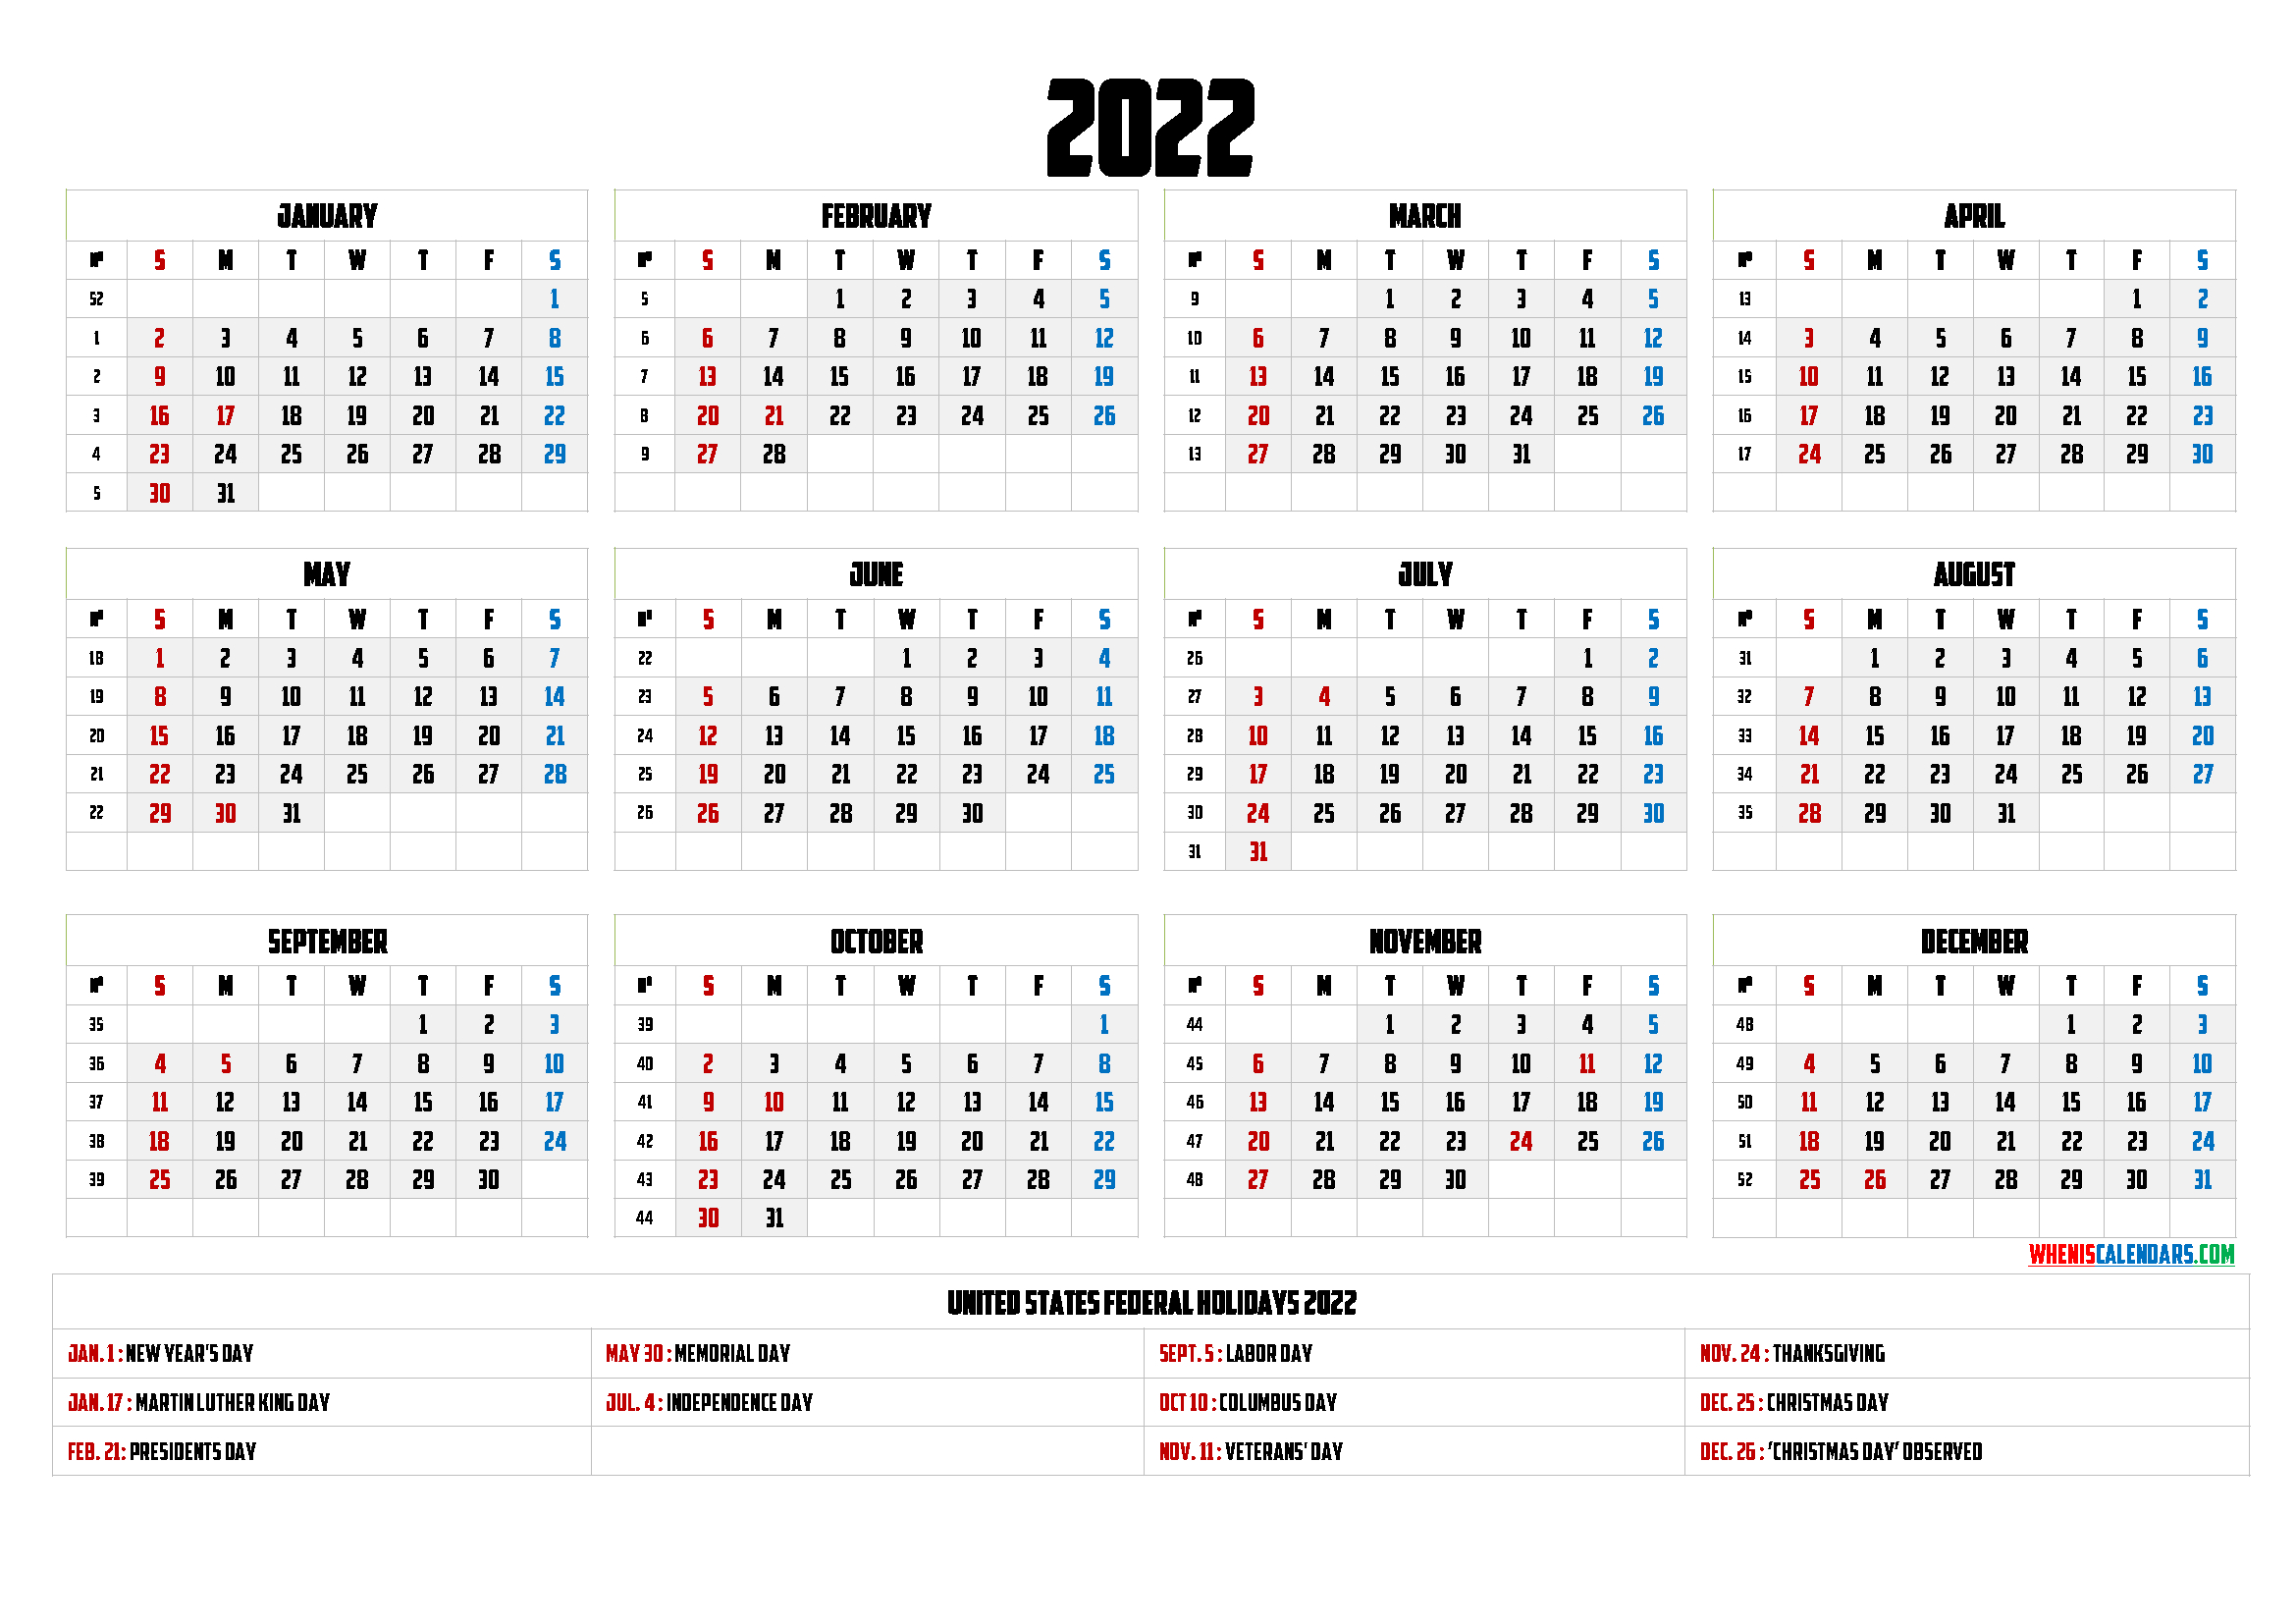 Collect Thakur Prasad Calendar 2022 February